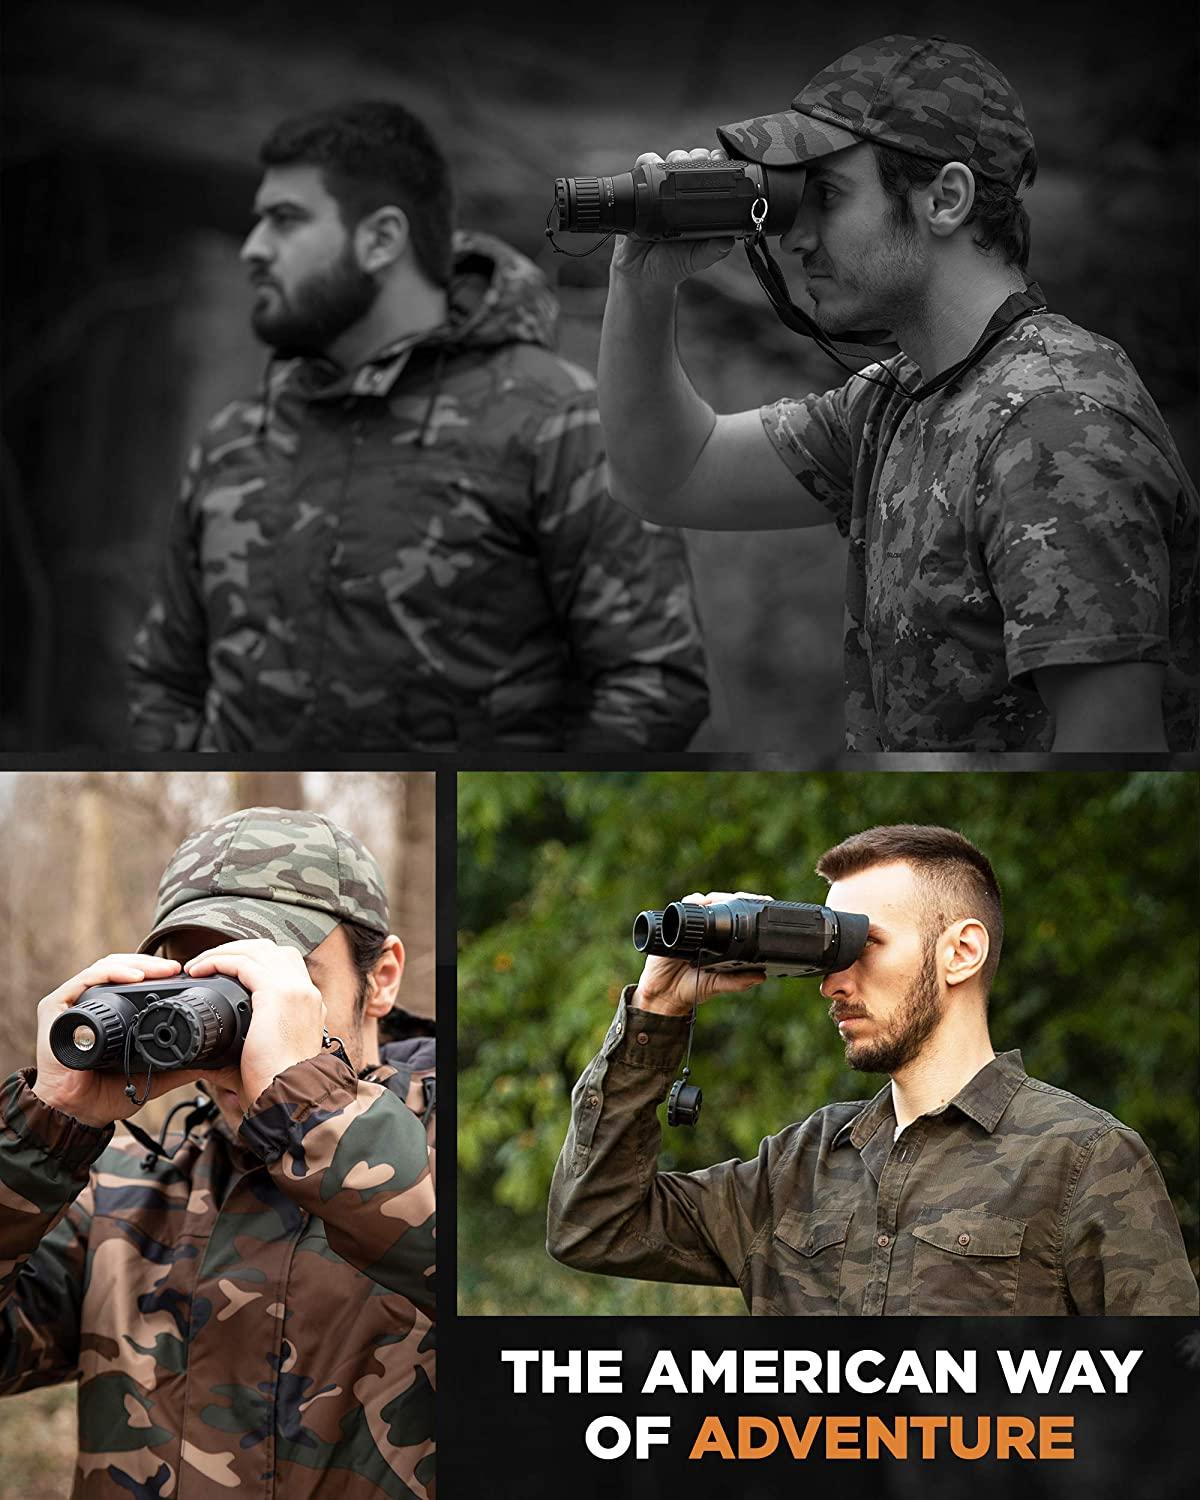 CREATIVE XP Night Vision Goggles - Military Tactical Thermal Binoculars w/  Infrared Lens - Digital Camera Recorder - GlassCondor Pro